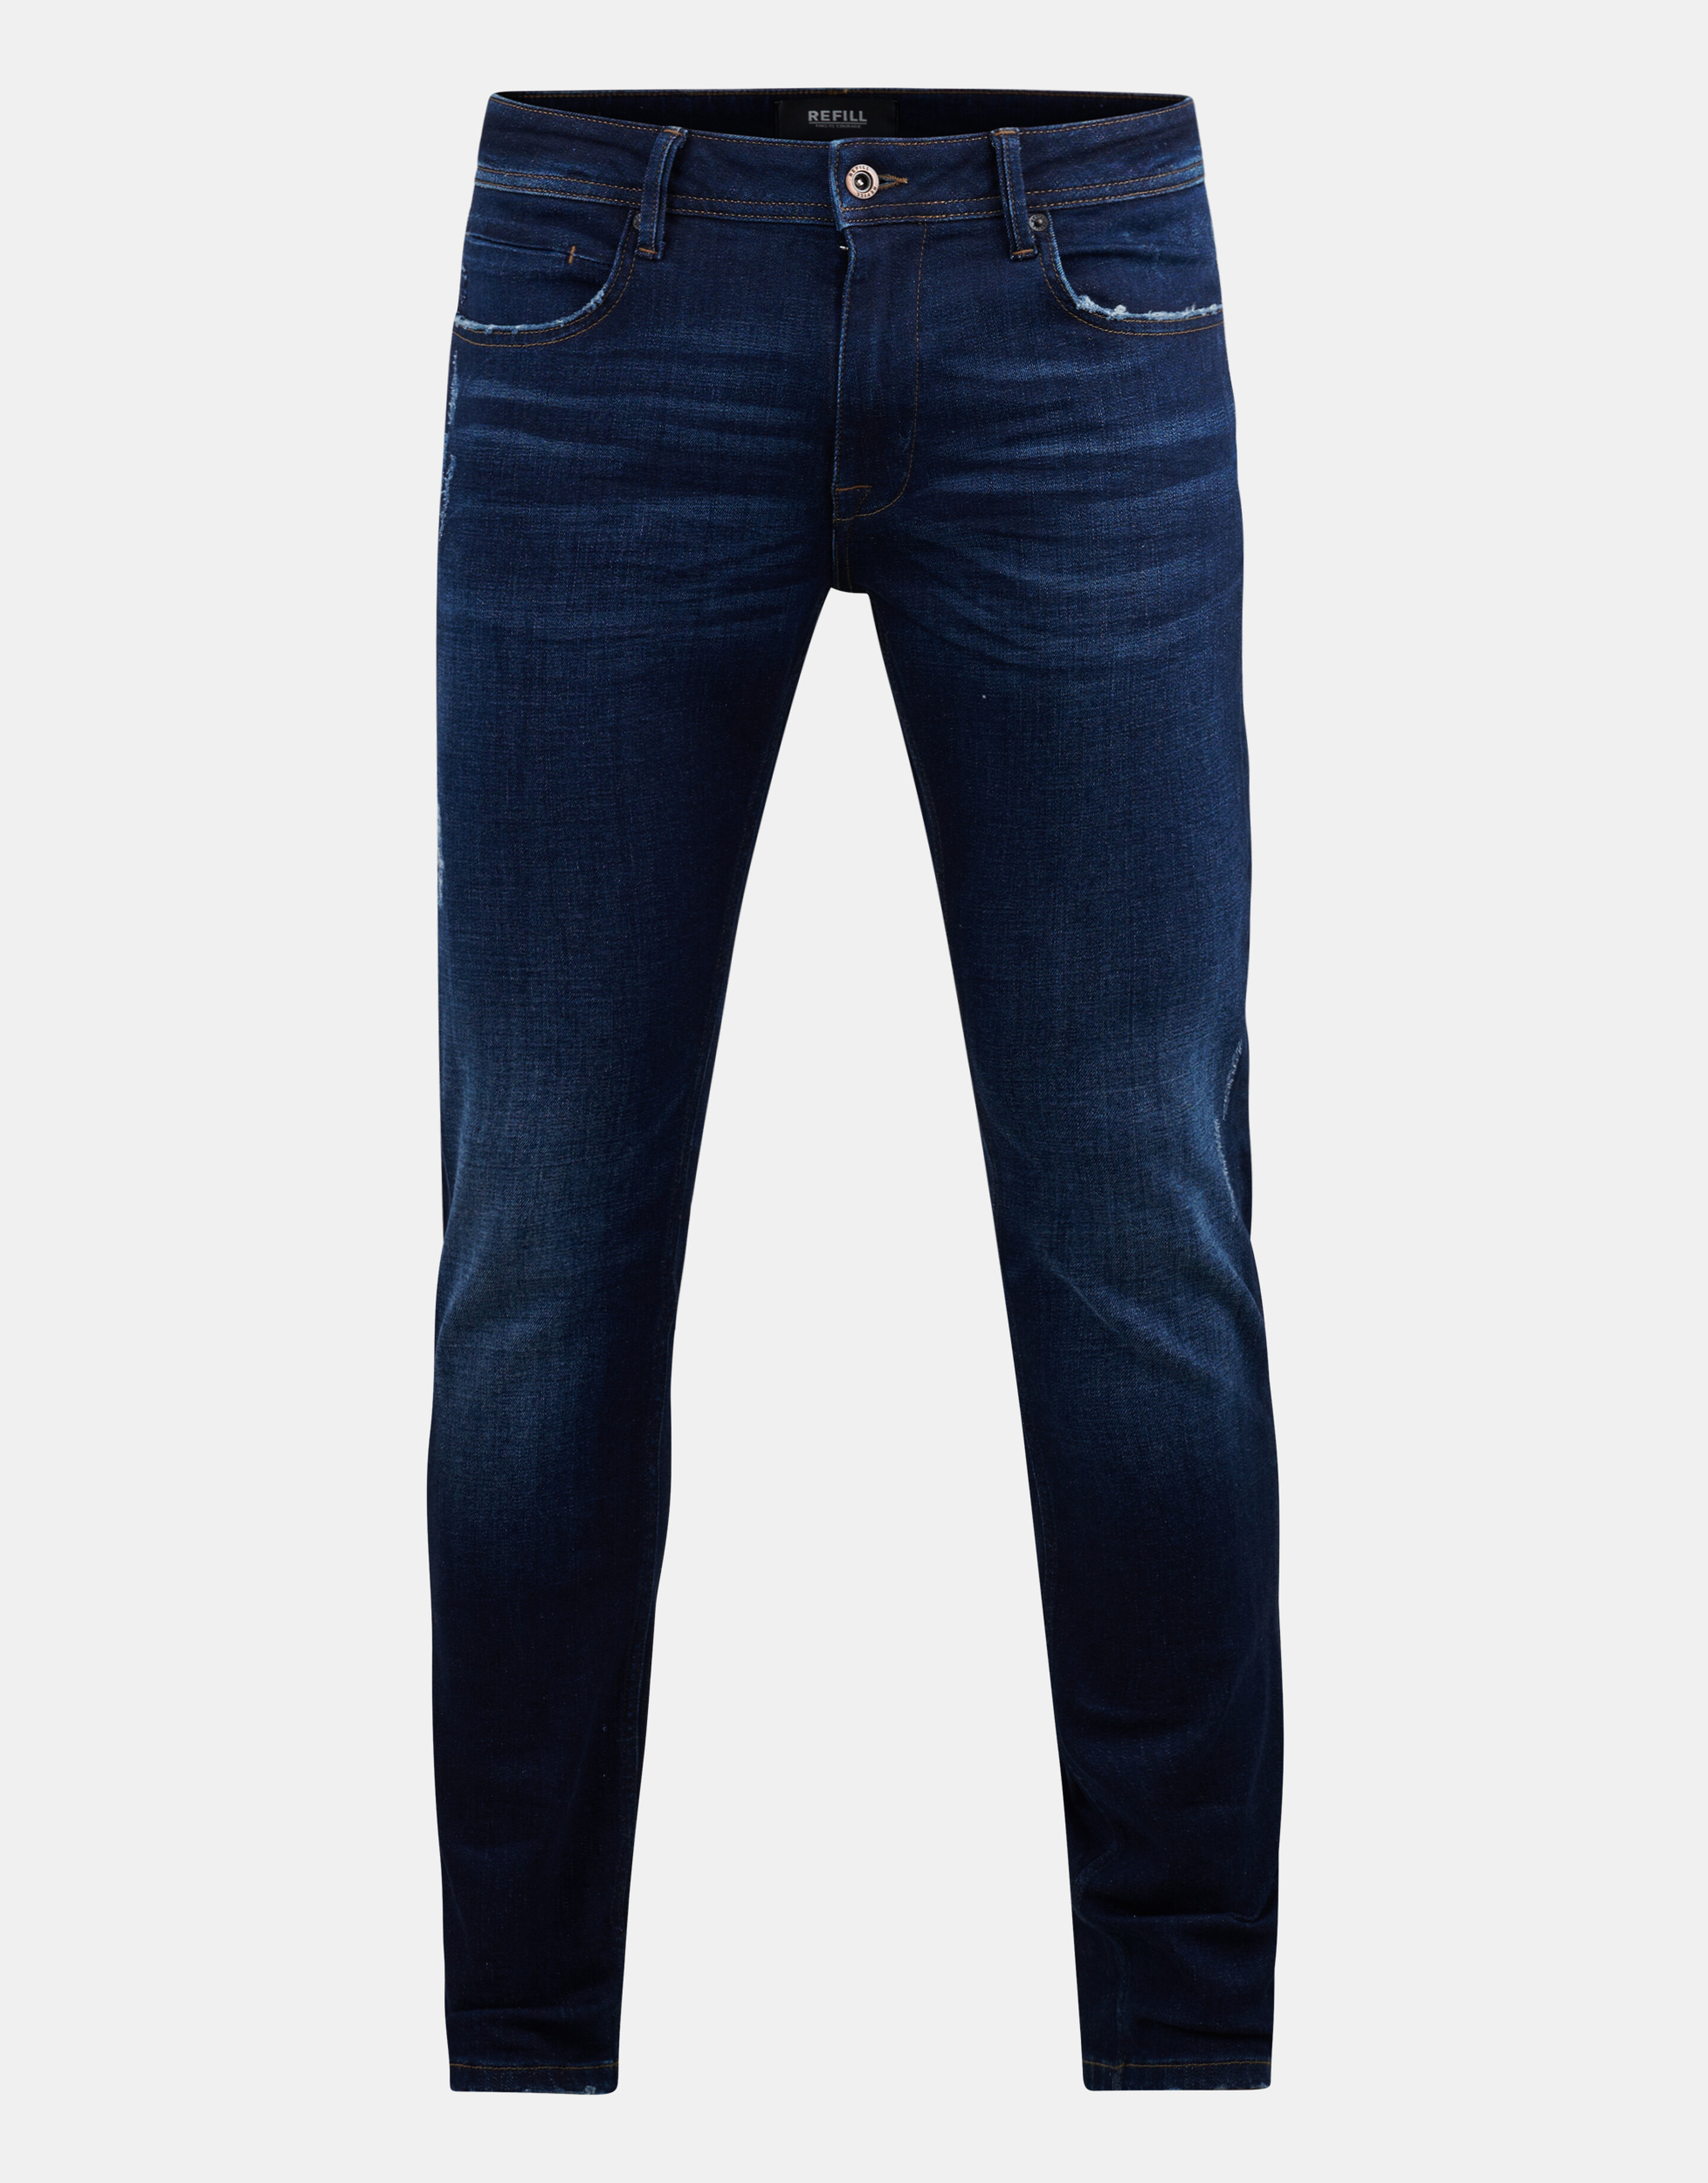 Skinny Jeans Dunkelblau Länge 34 Refill